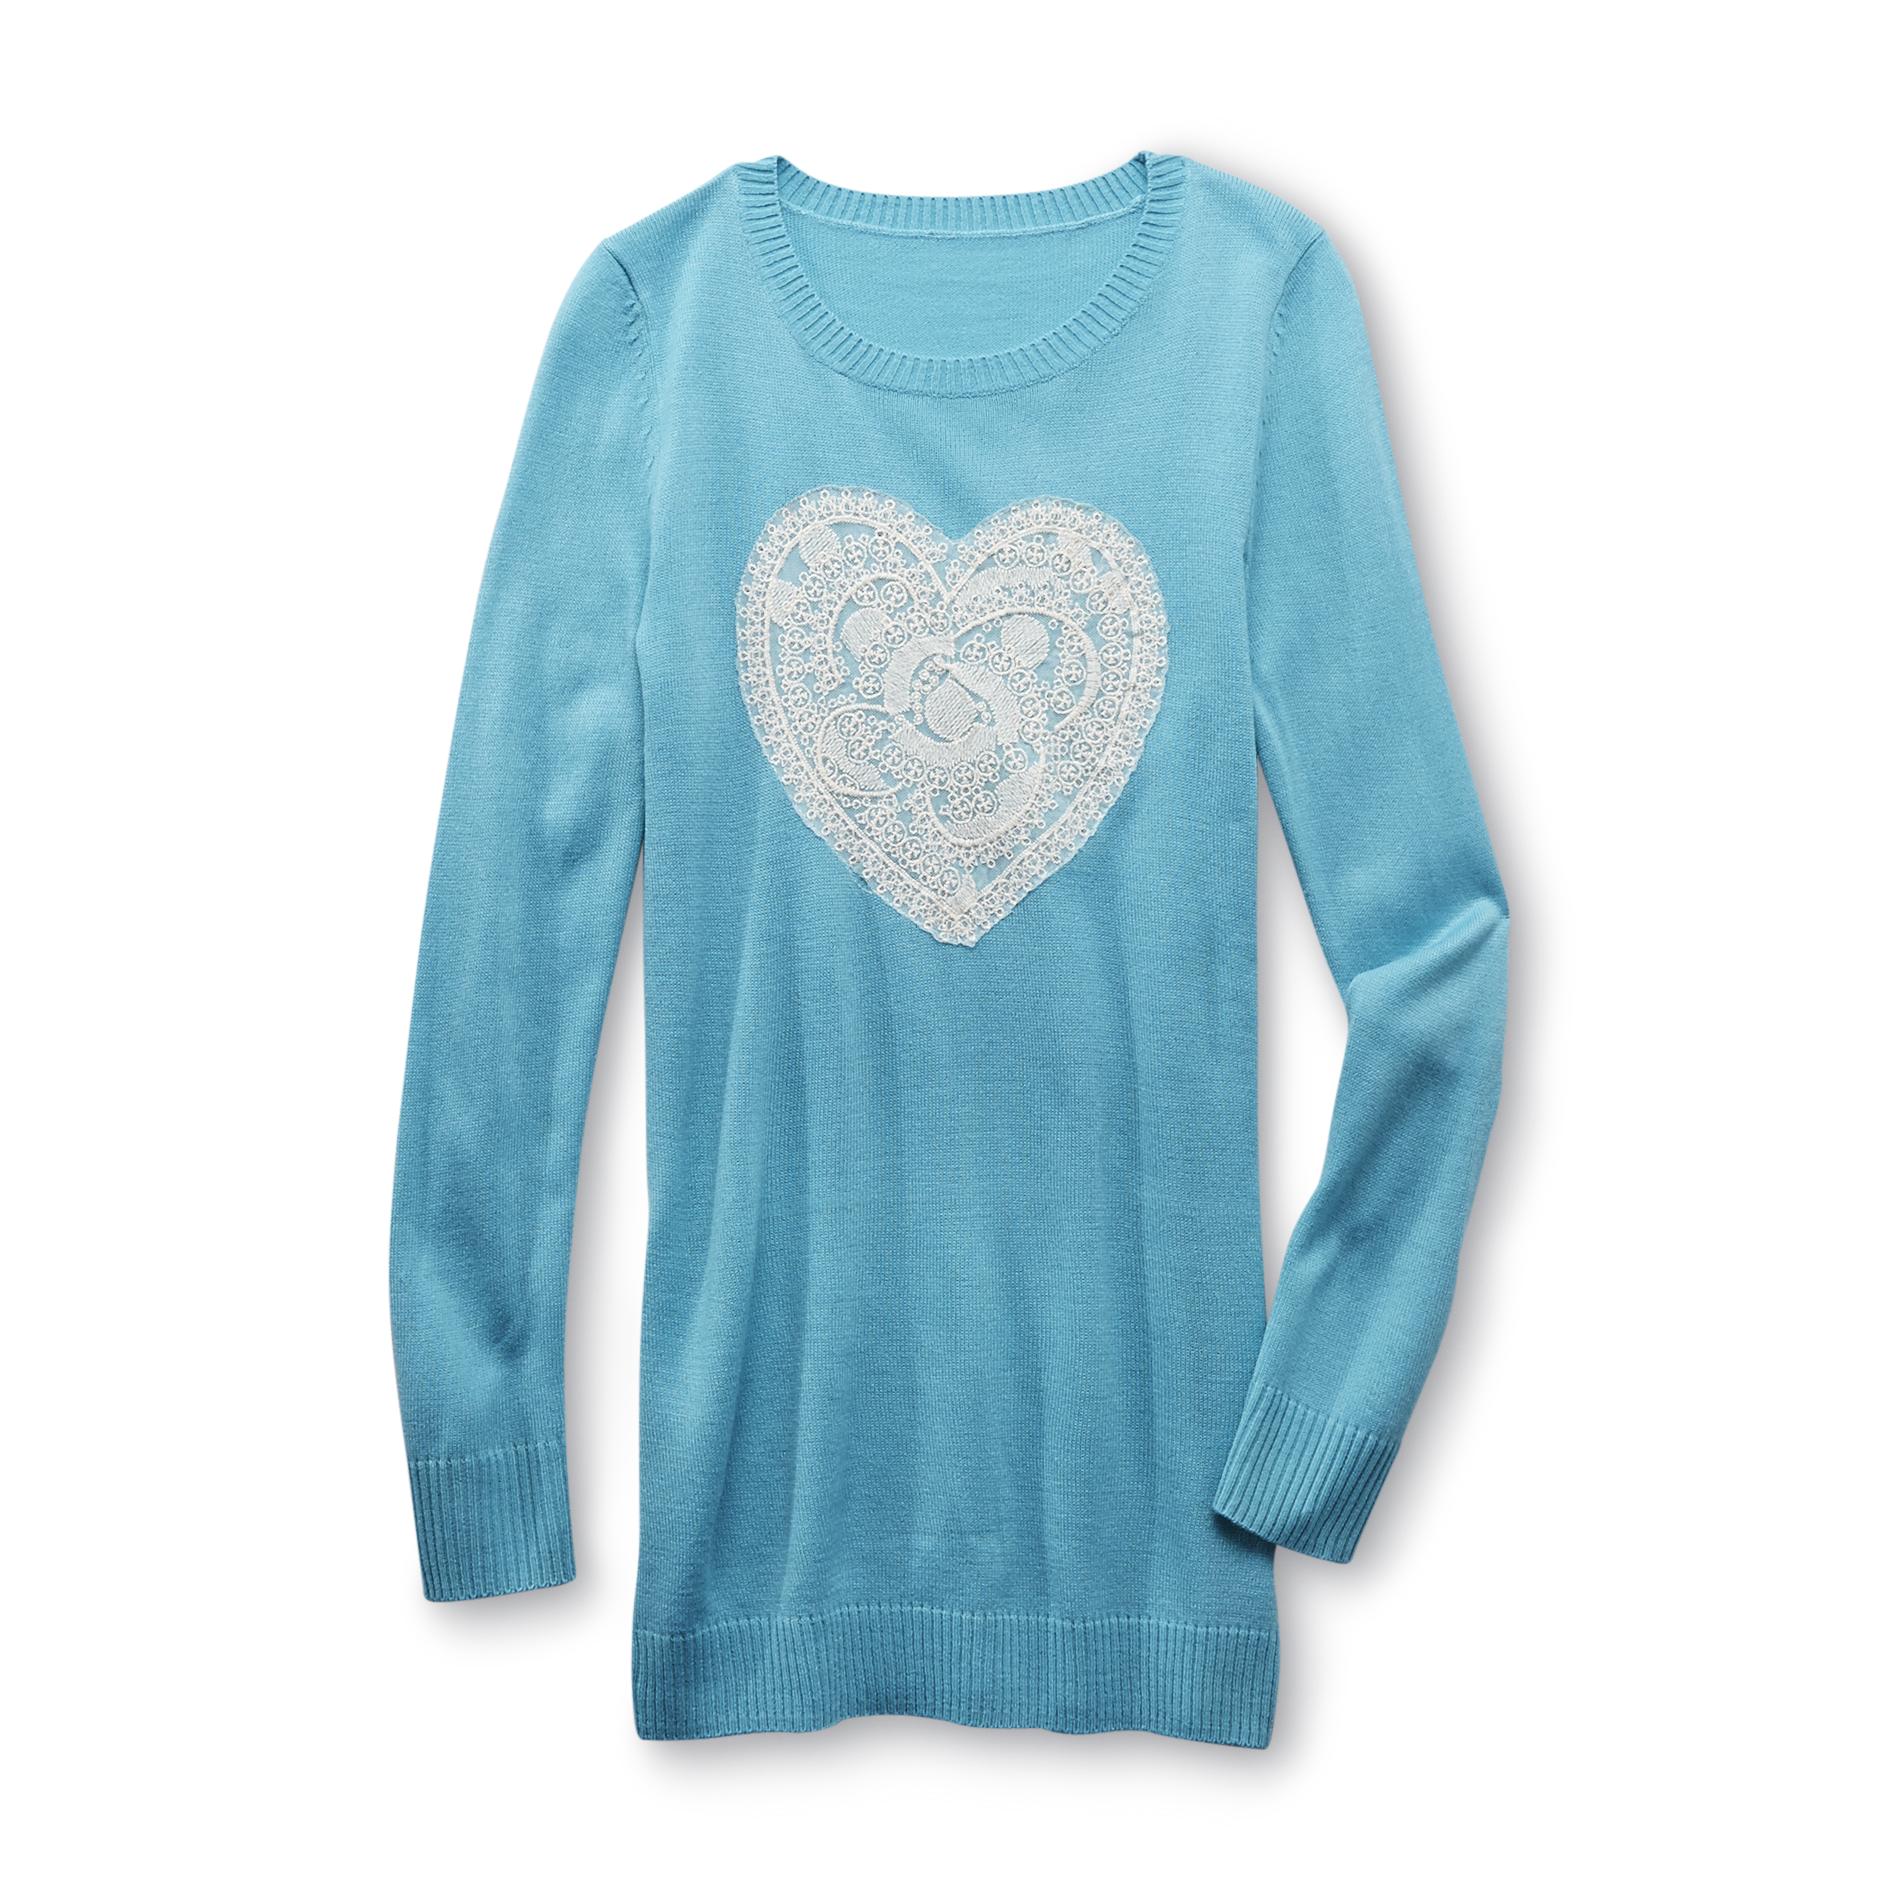 Route 66 Girl's Crochet Applique Tunic Sweater - Heart